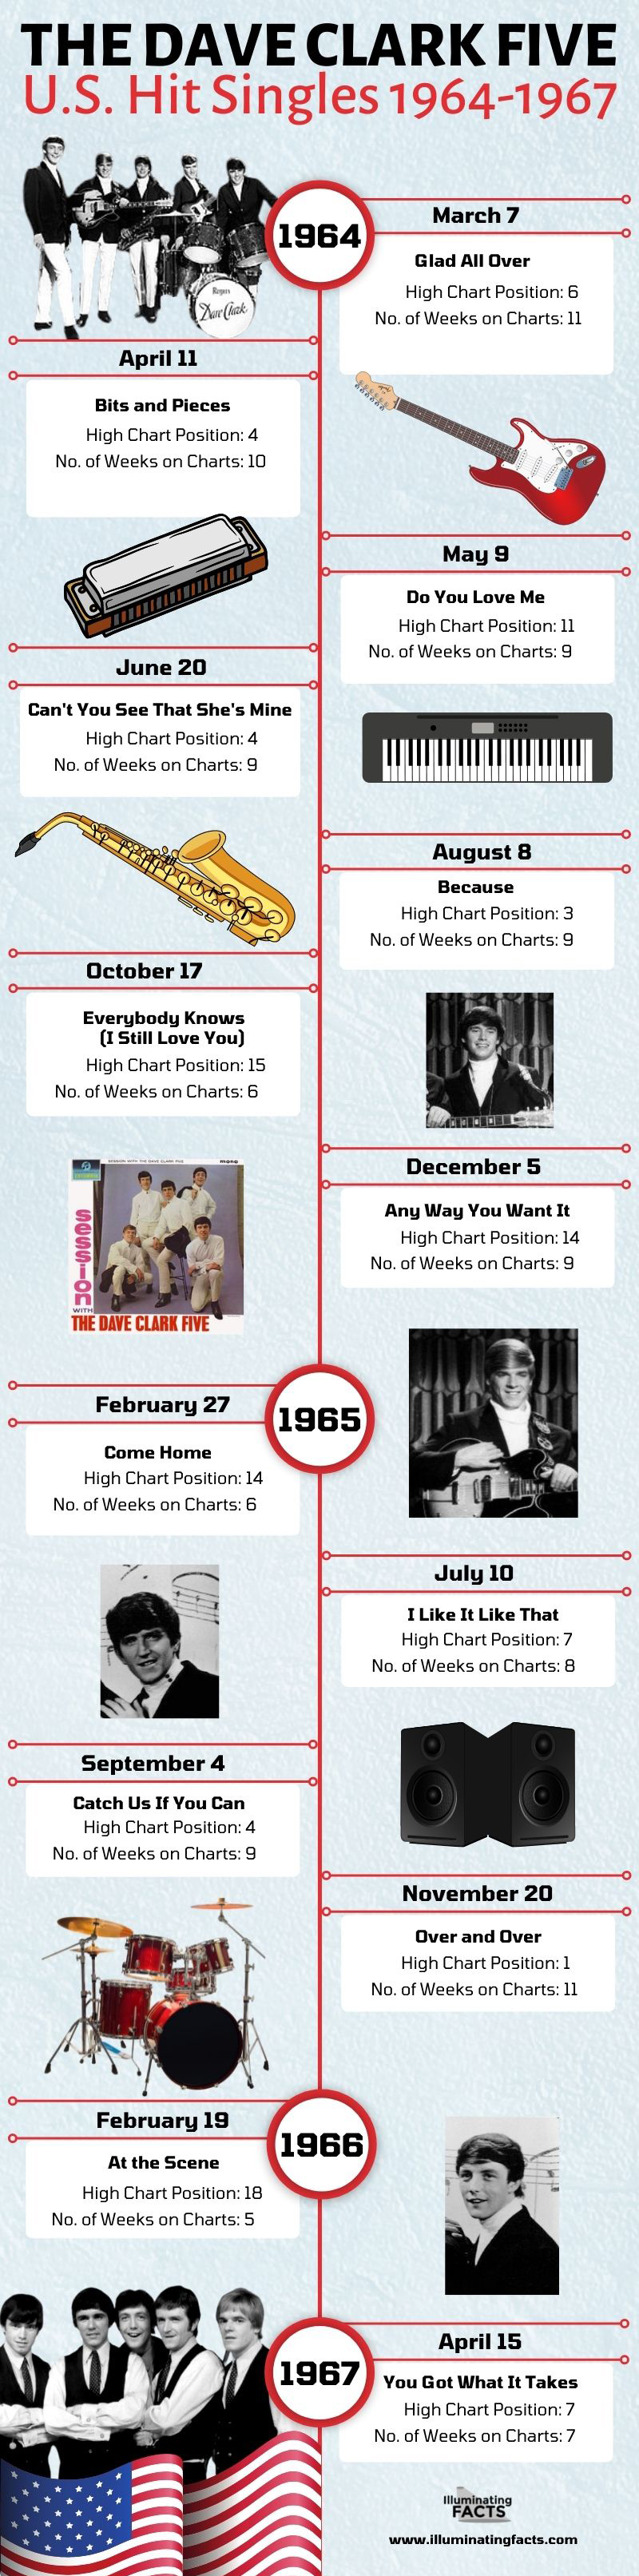 The Dave Clark Five U.S. Hit Singles 1964-1967